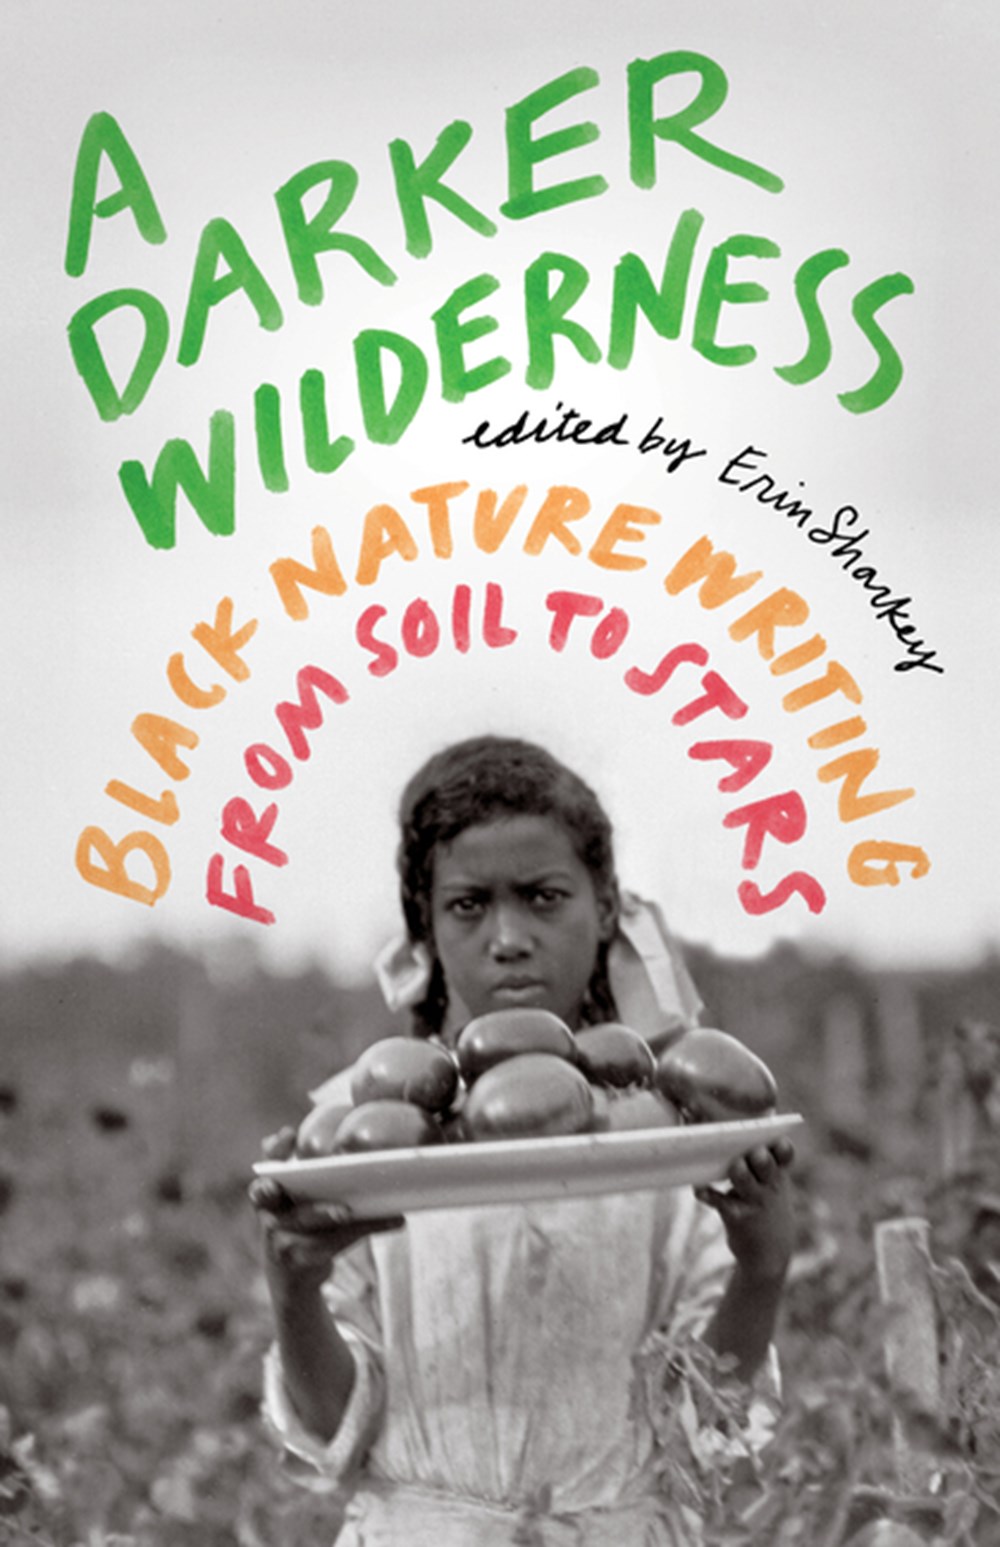 Darker Wilderness: Black Nature Writing from Soil to Stars